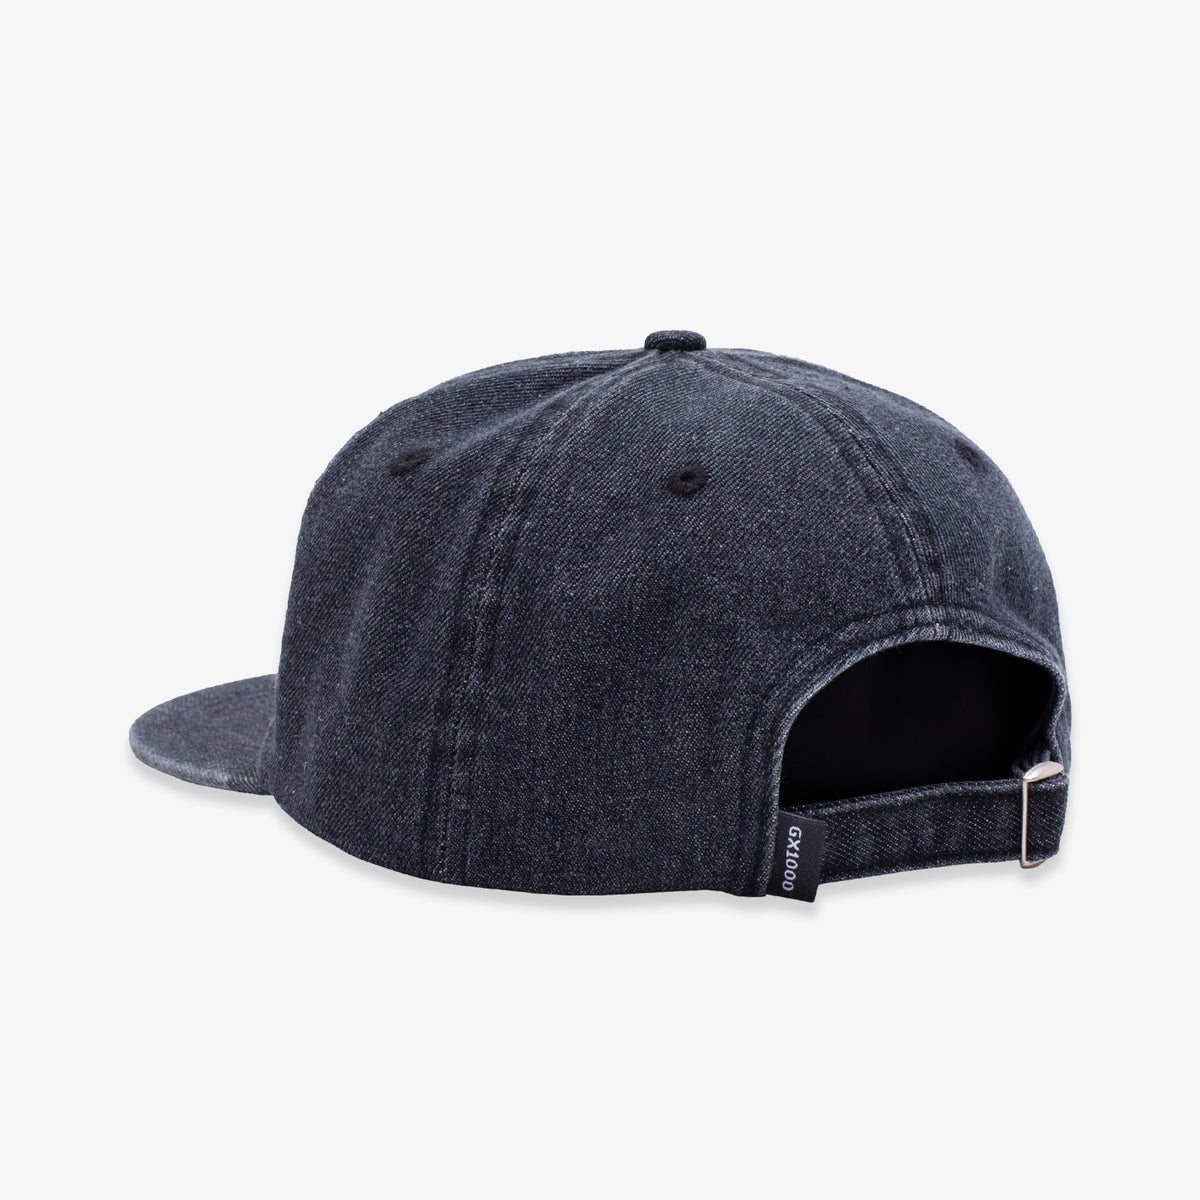 Tag Hat (Black)